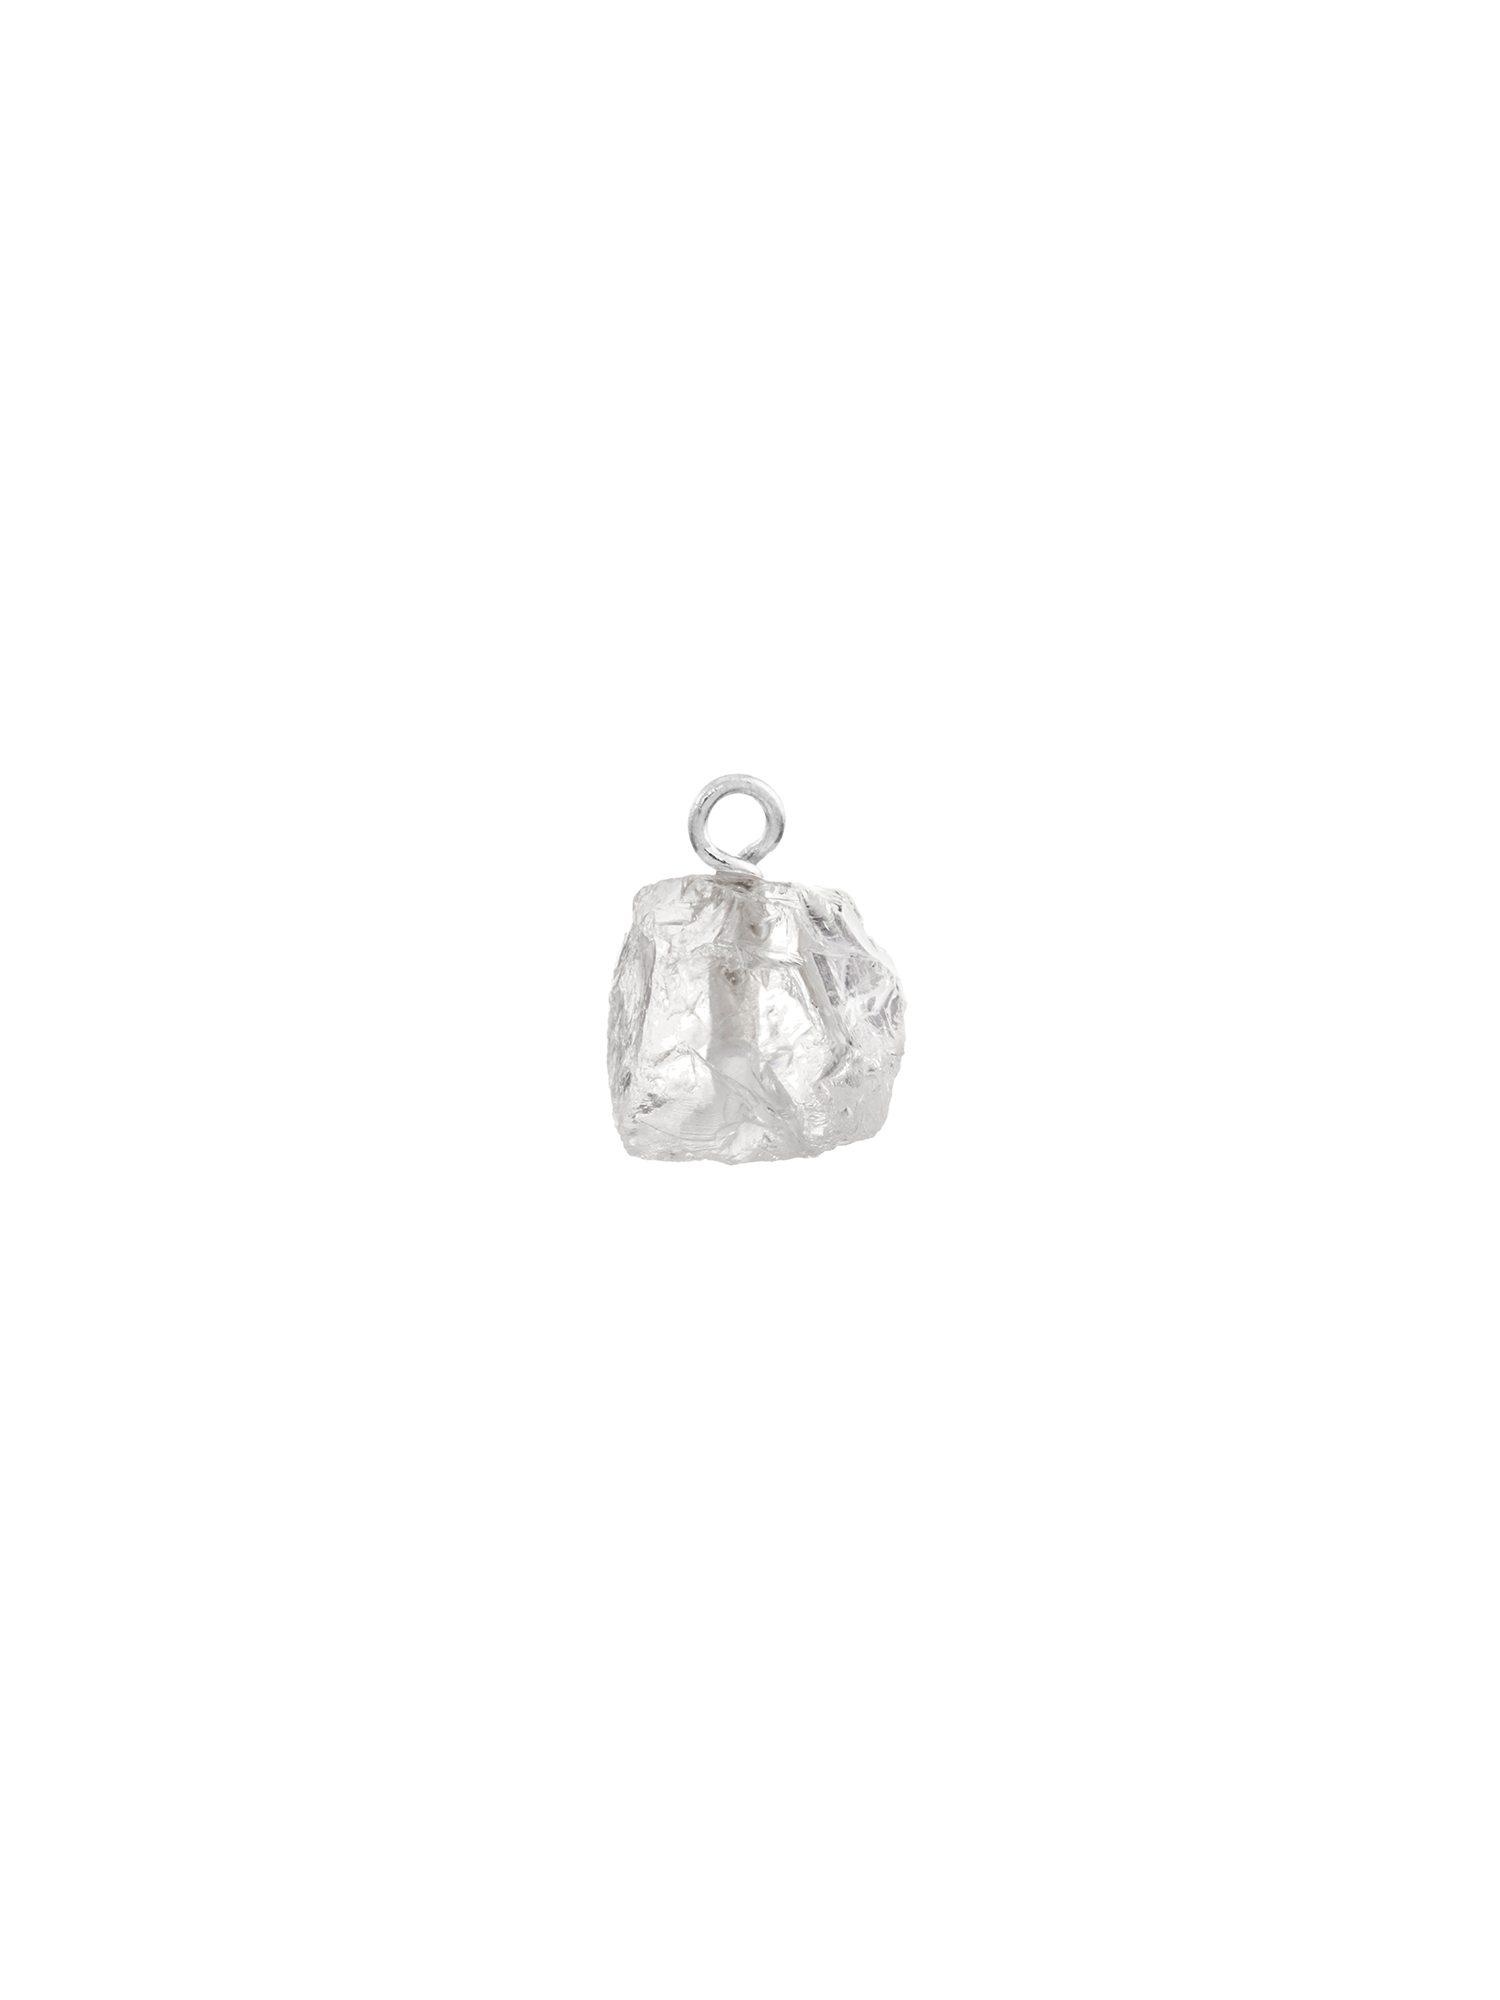 raw quartz earring charm | clear quartz